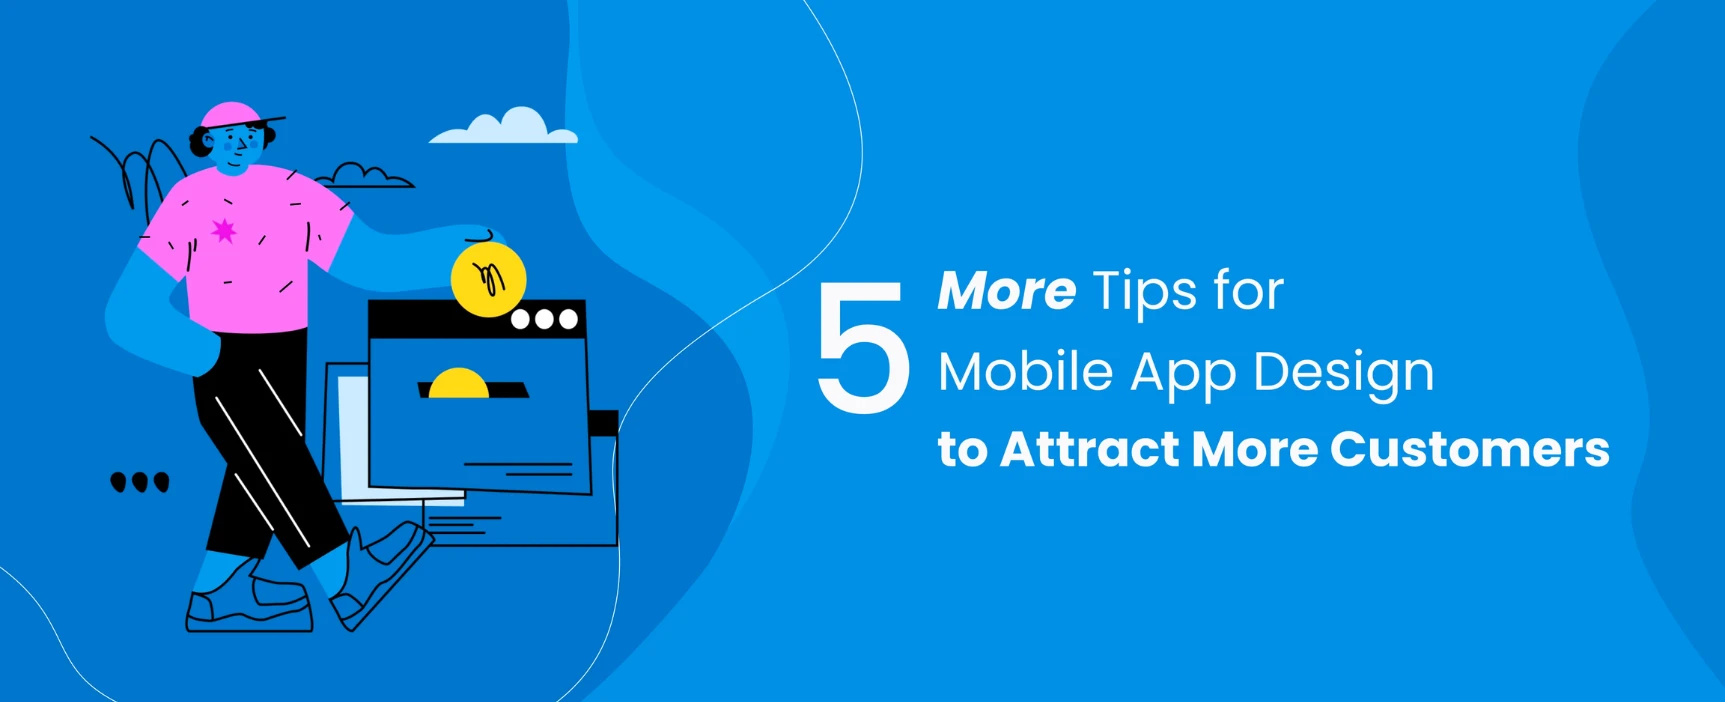 5 More tips for mobile app design